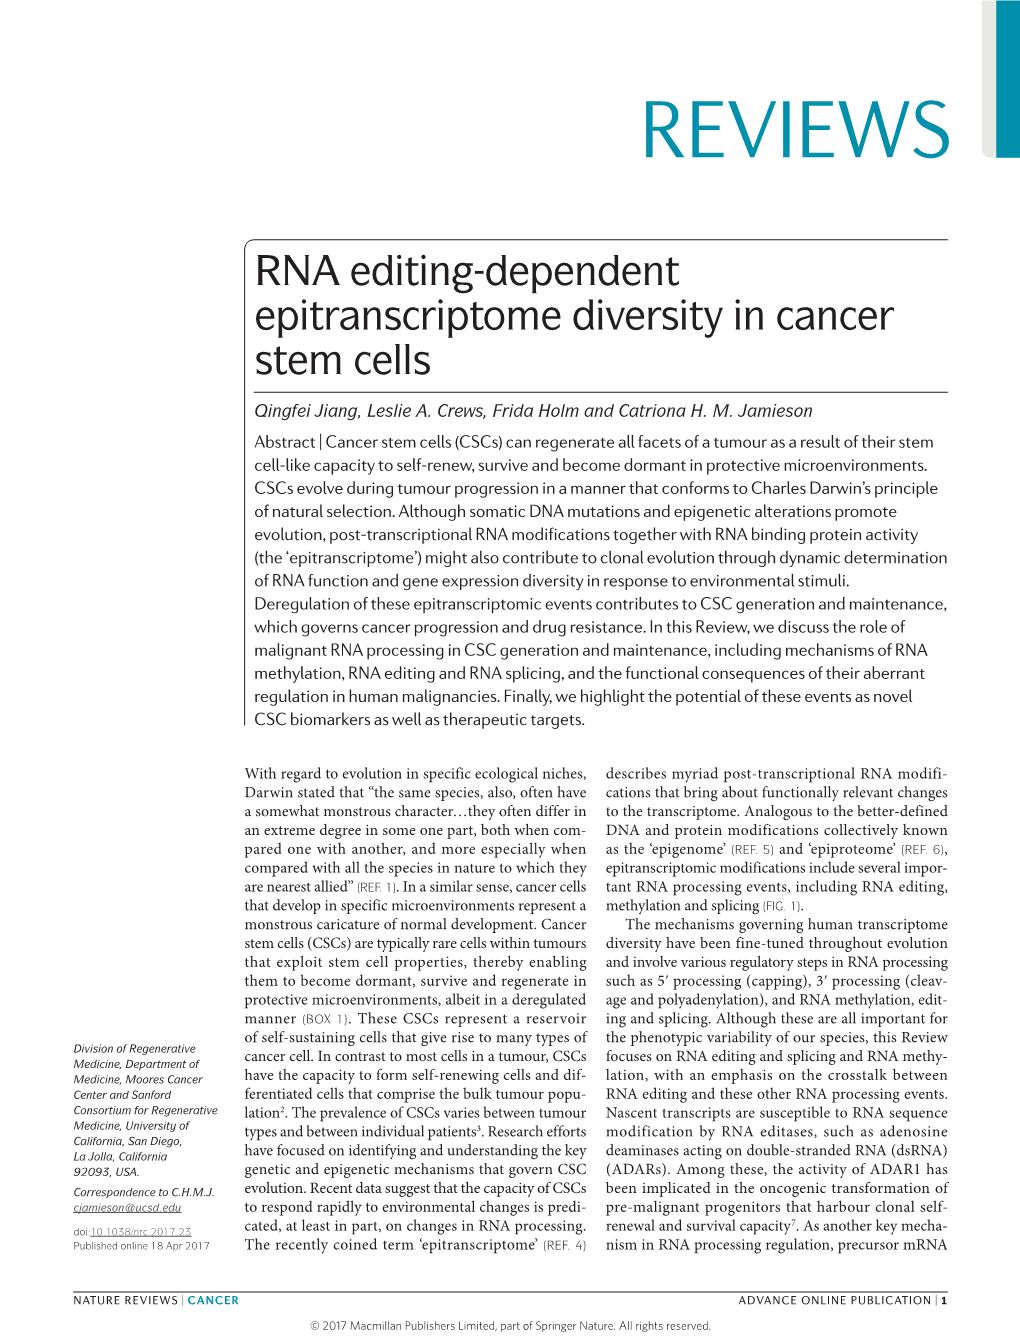 RNA Editing-Dependent Epitranscriptome Diversity in Cancer Stem Cells